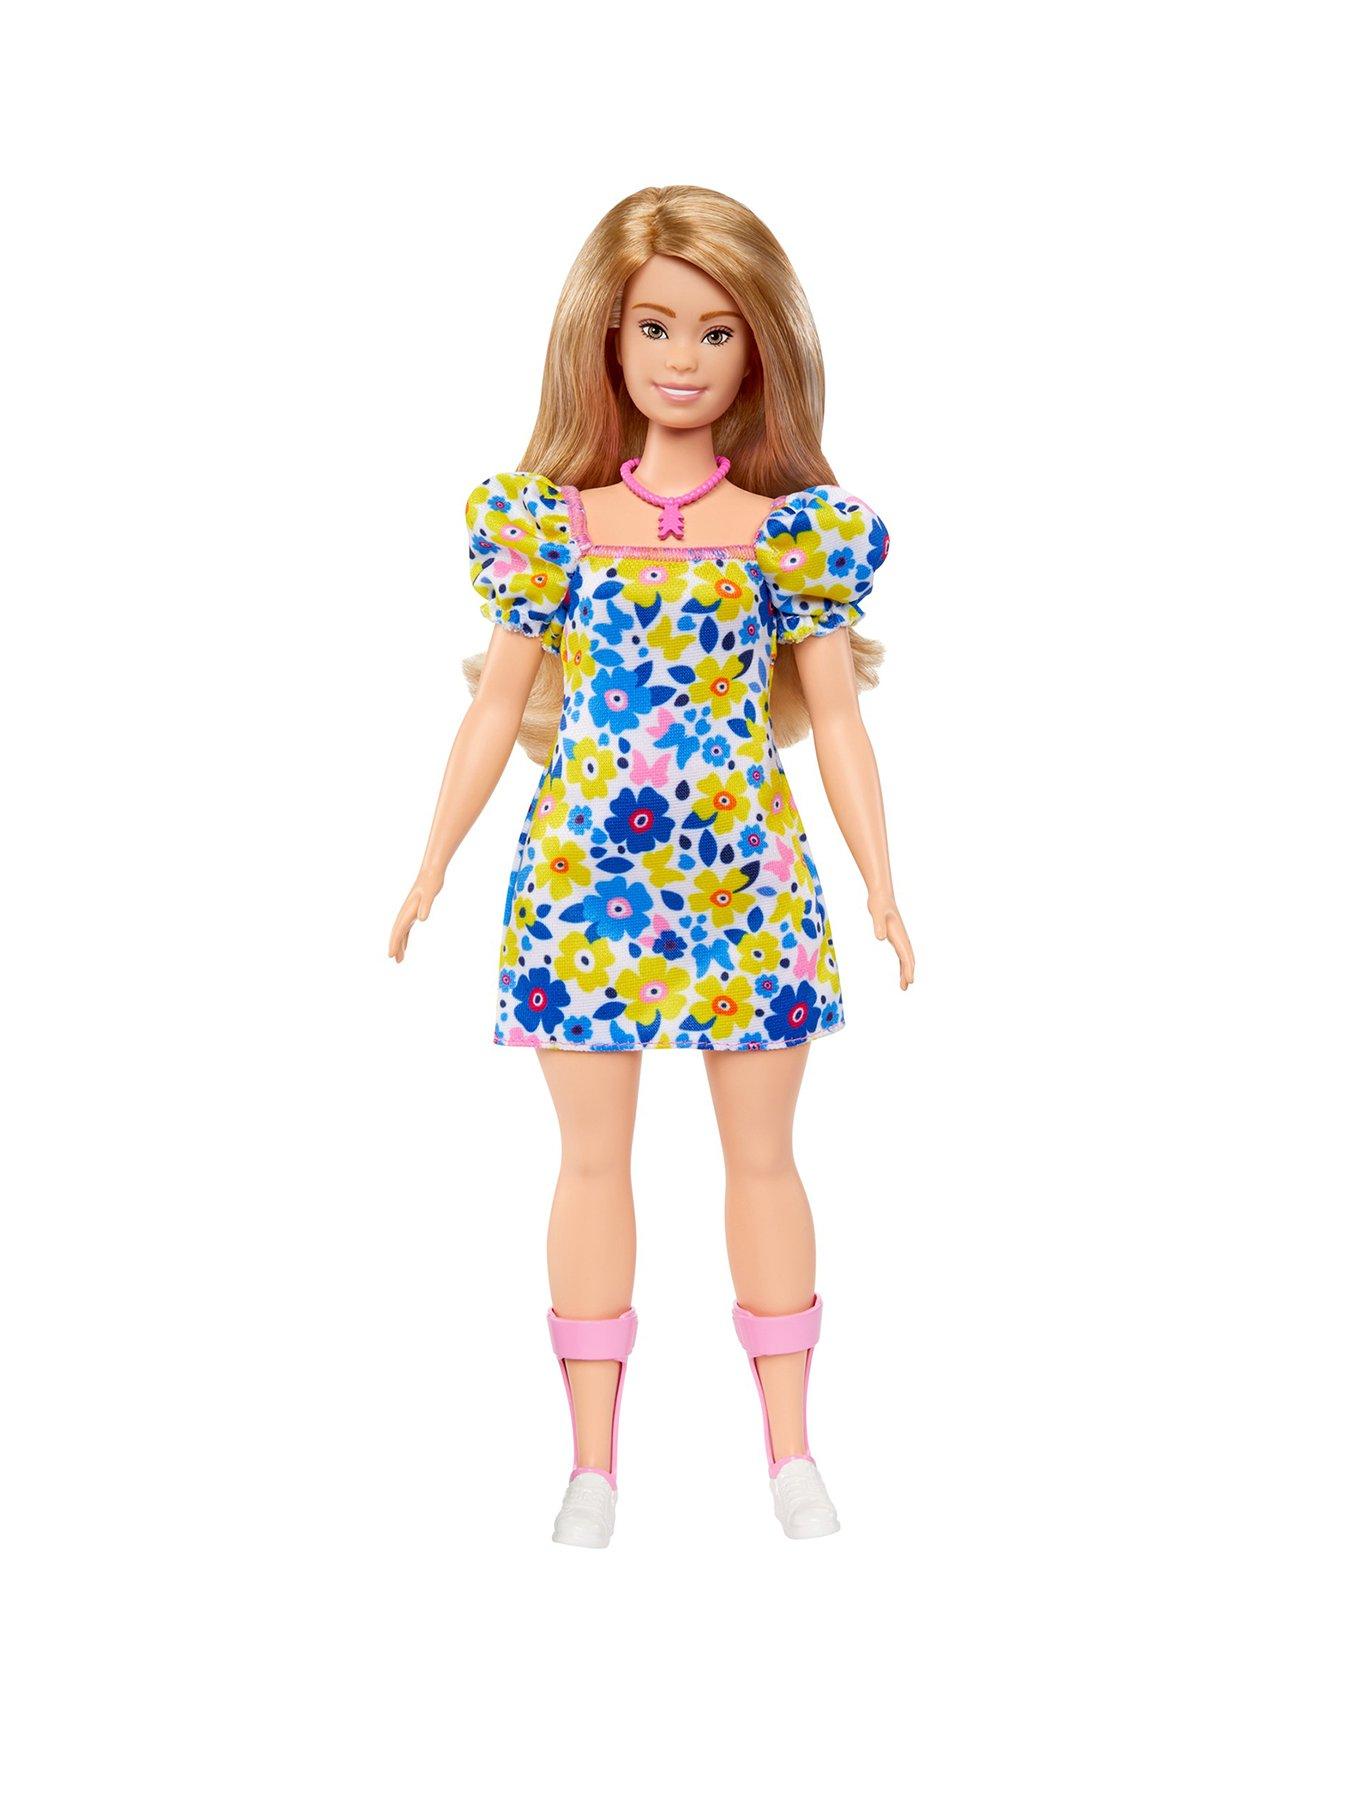 Barbie Ken Fashionistas Doll #204 - Paisley Print Tee